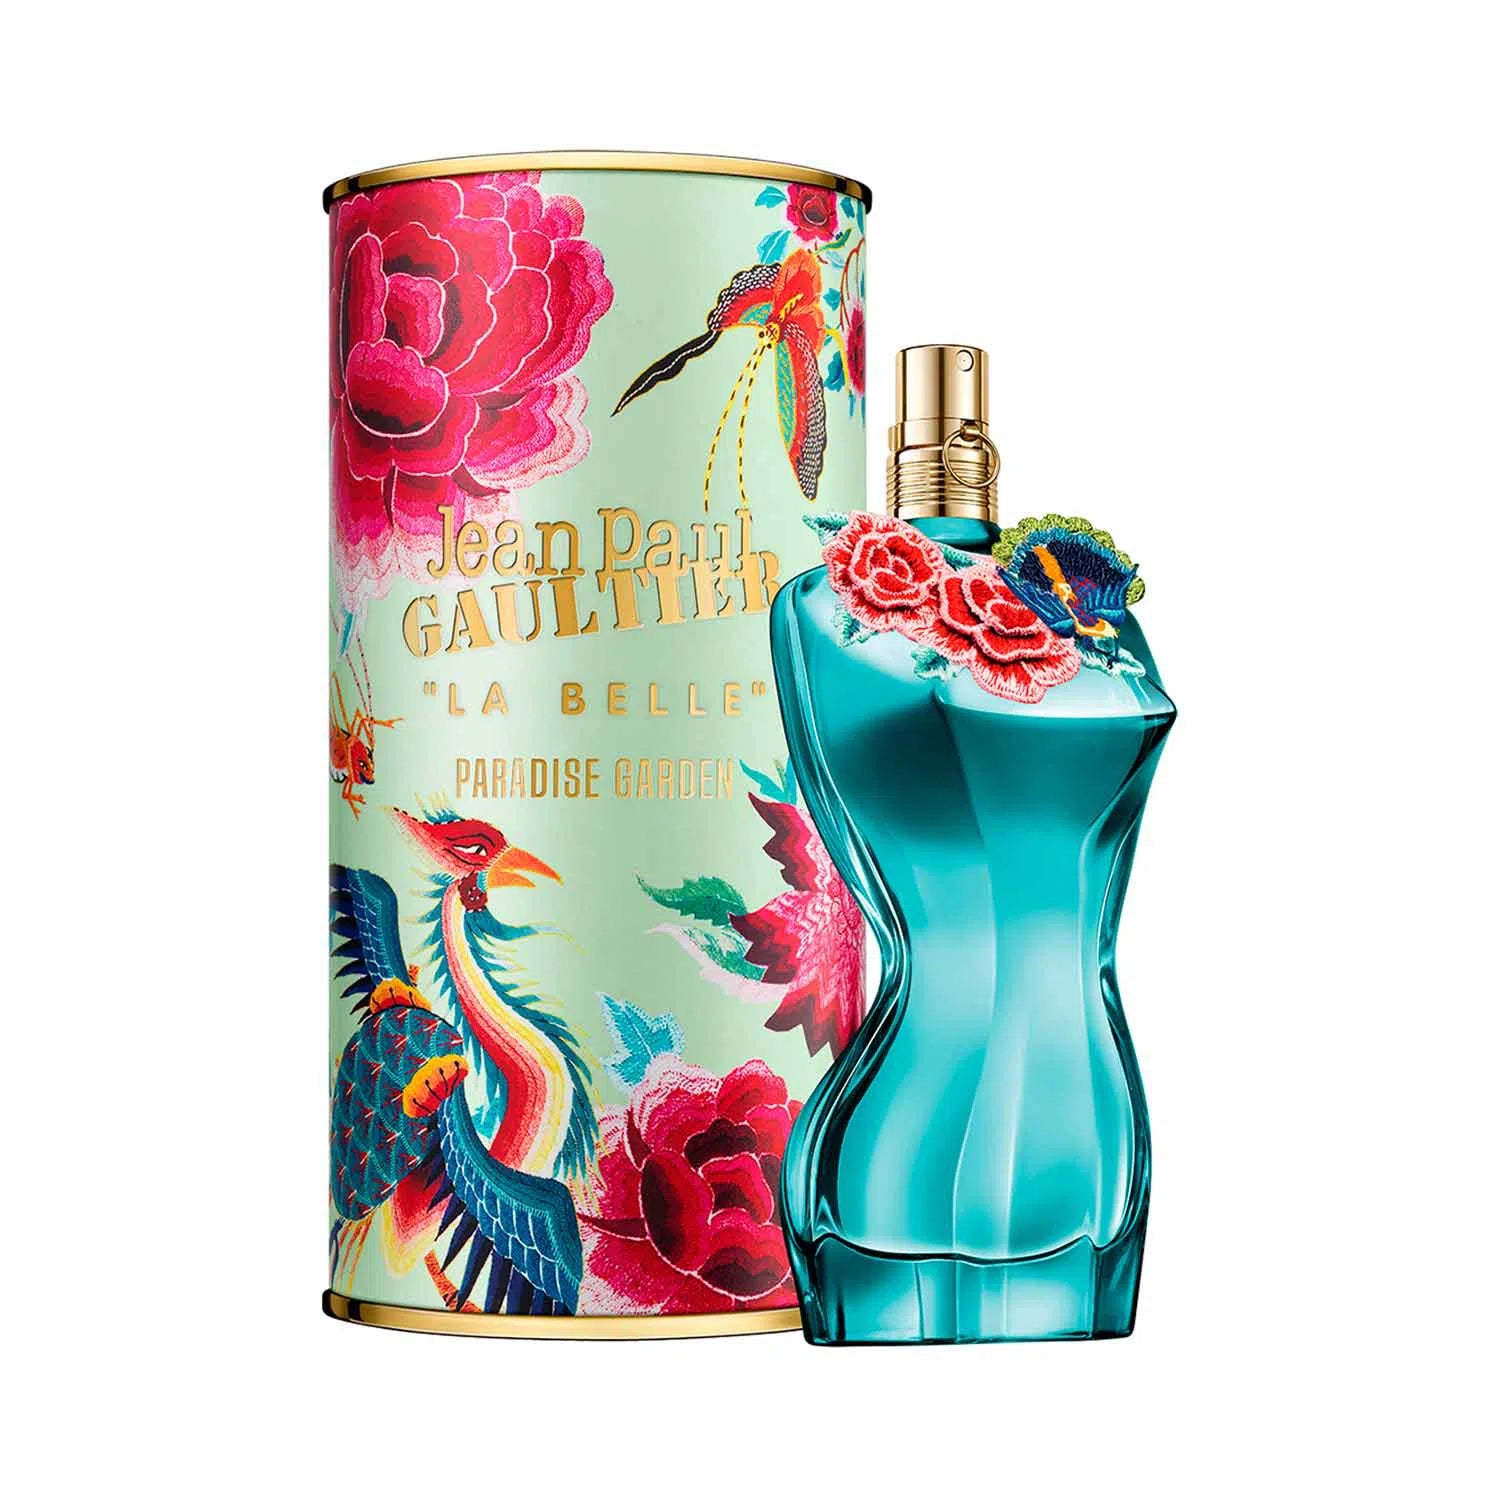 Perfume Jean Paul Gaultier La Belle Paradise Garden EDP (W) / 100 ml - 8435415091251- Prive Perfumes Honduras